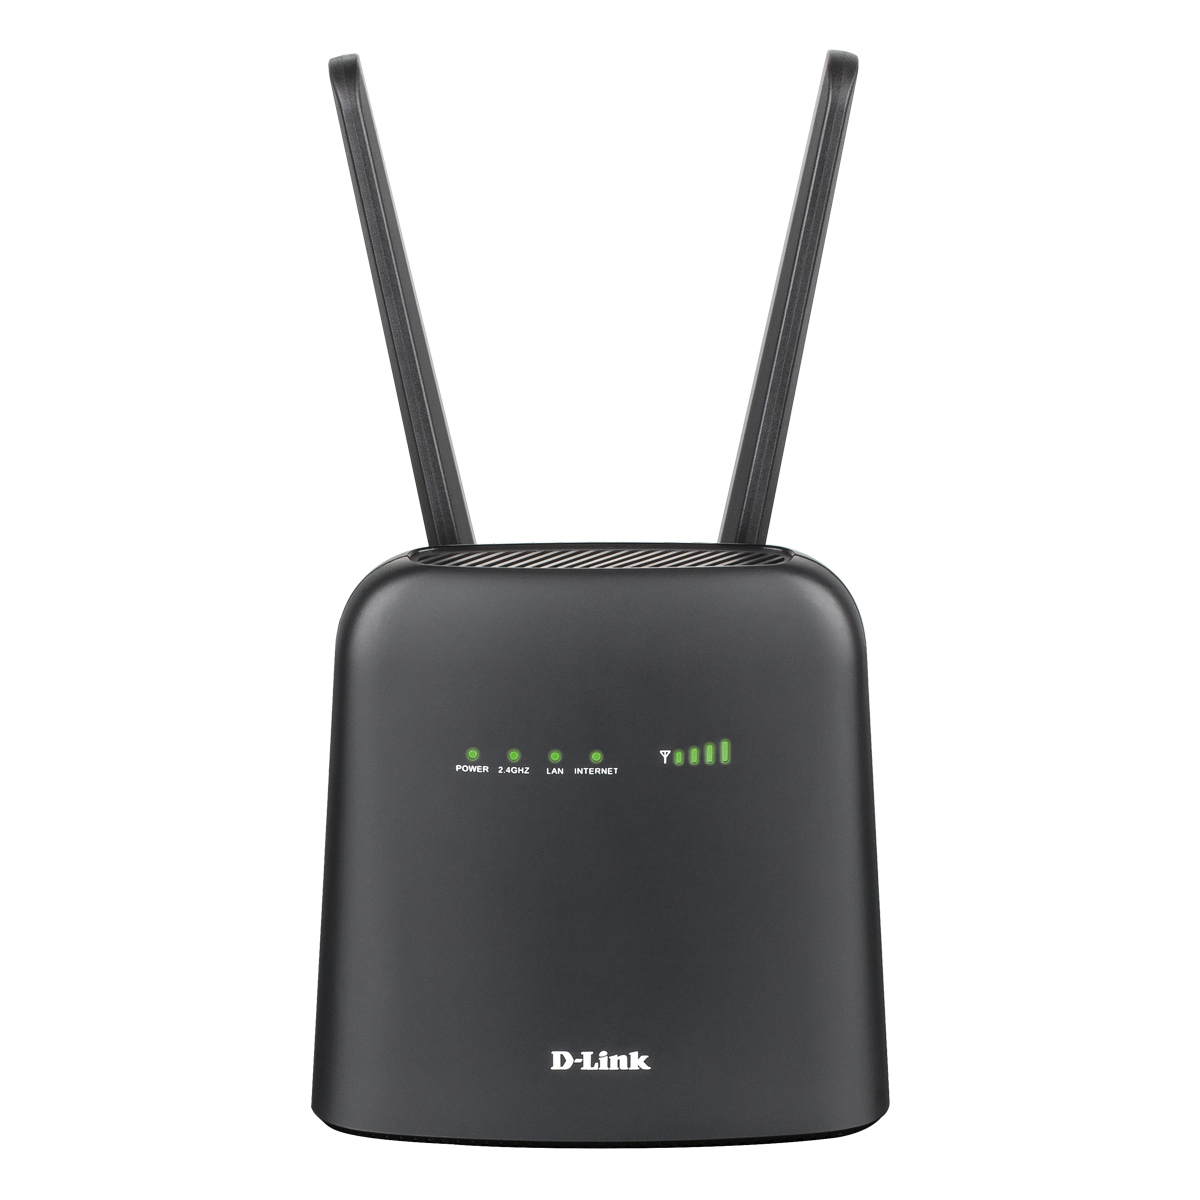 D-Link DWR-920 4G LTE WLAN Router LTE Cat. 4 bis zu 150 Mbit/s, WLAN bis zu 300 Mbit/s von D-Link